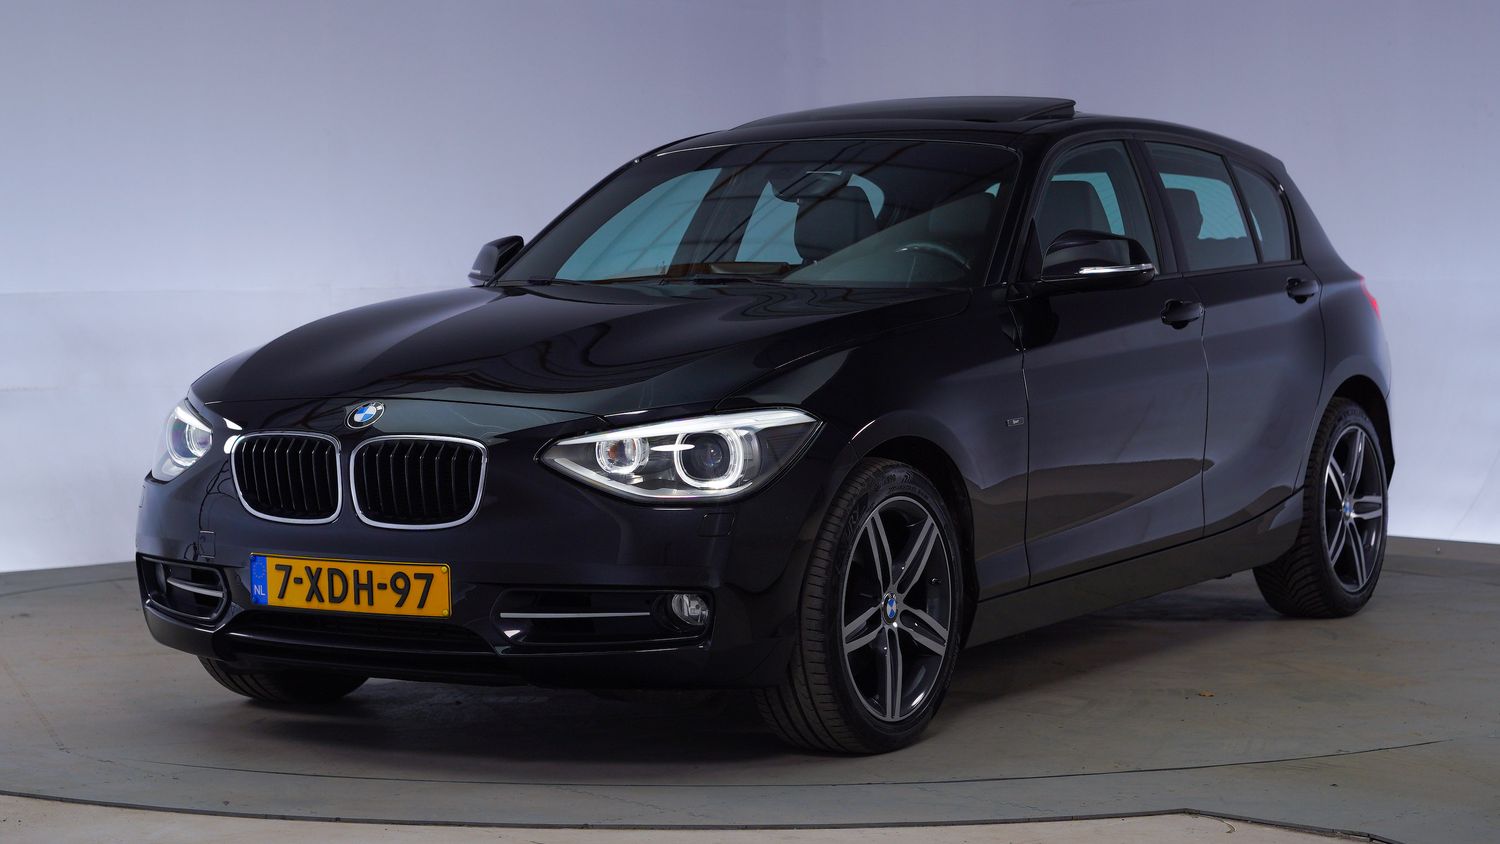 BMW 1-serie Hatchback 2014 7-XDH-97 1